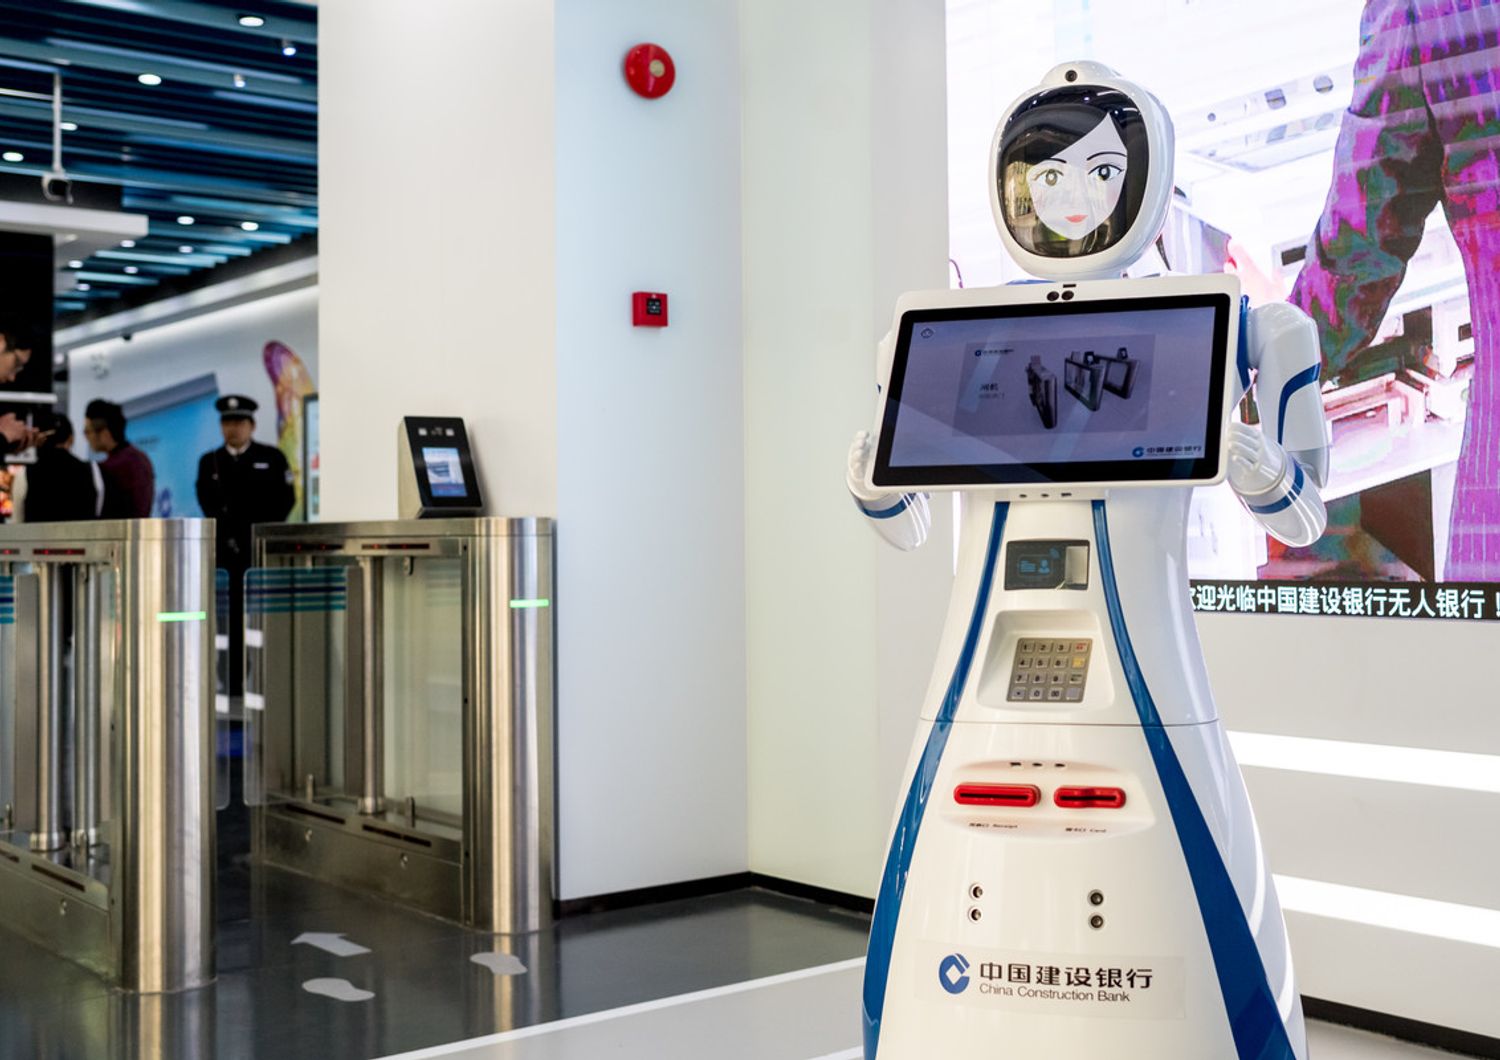 &nbsp;Il robot entrato in servizio alle China Construction Bank